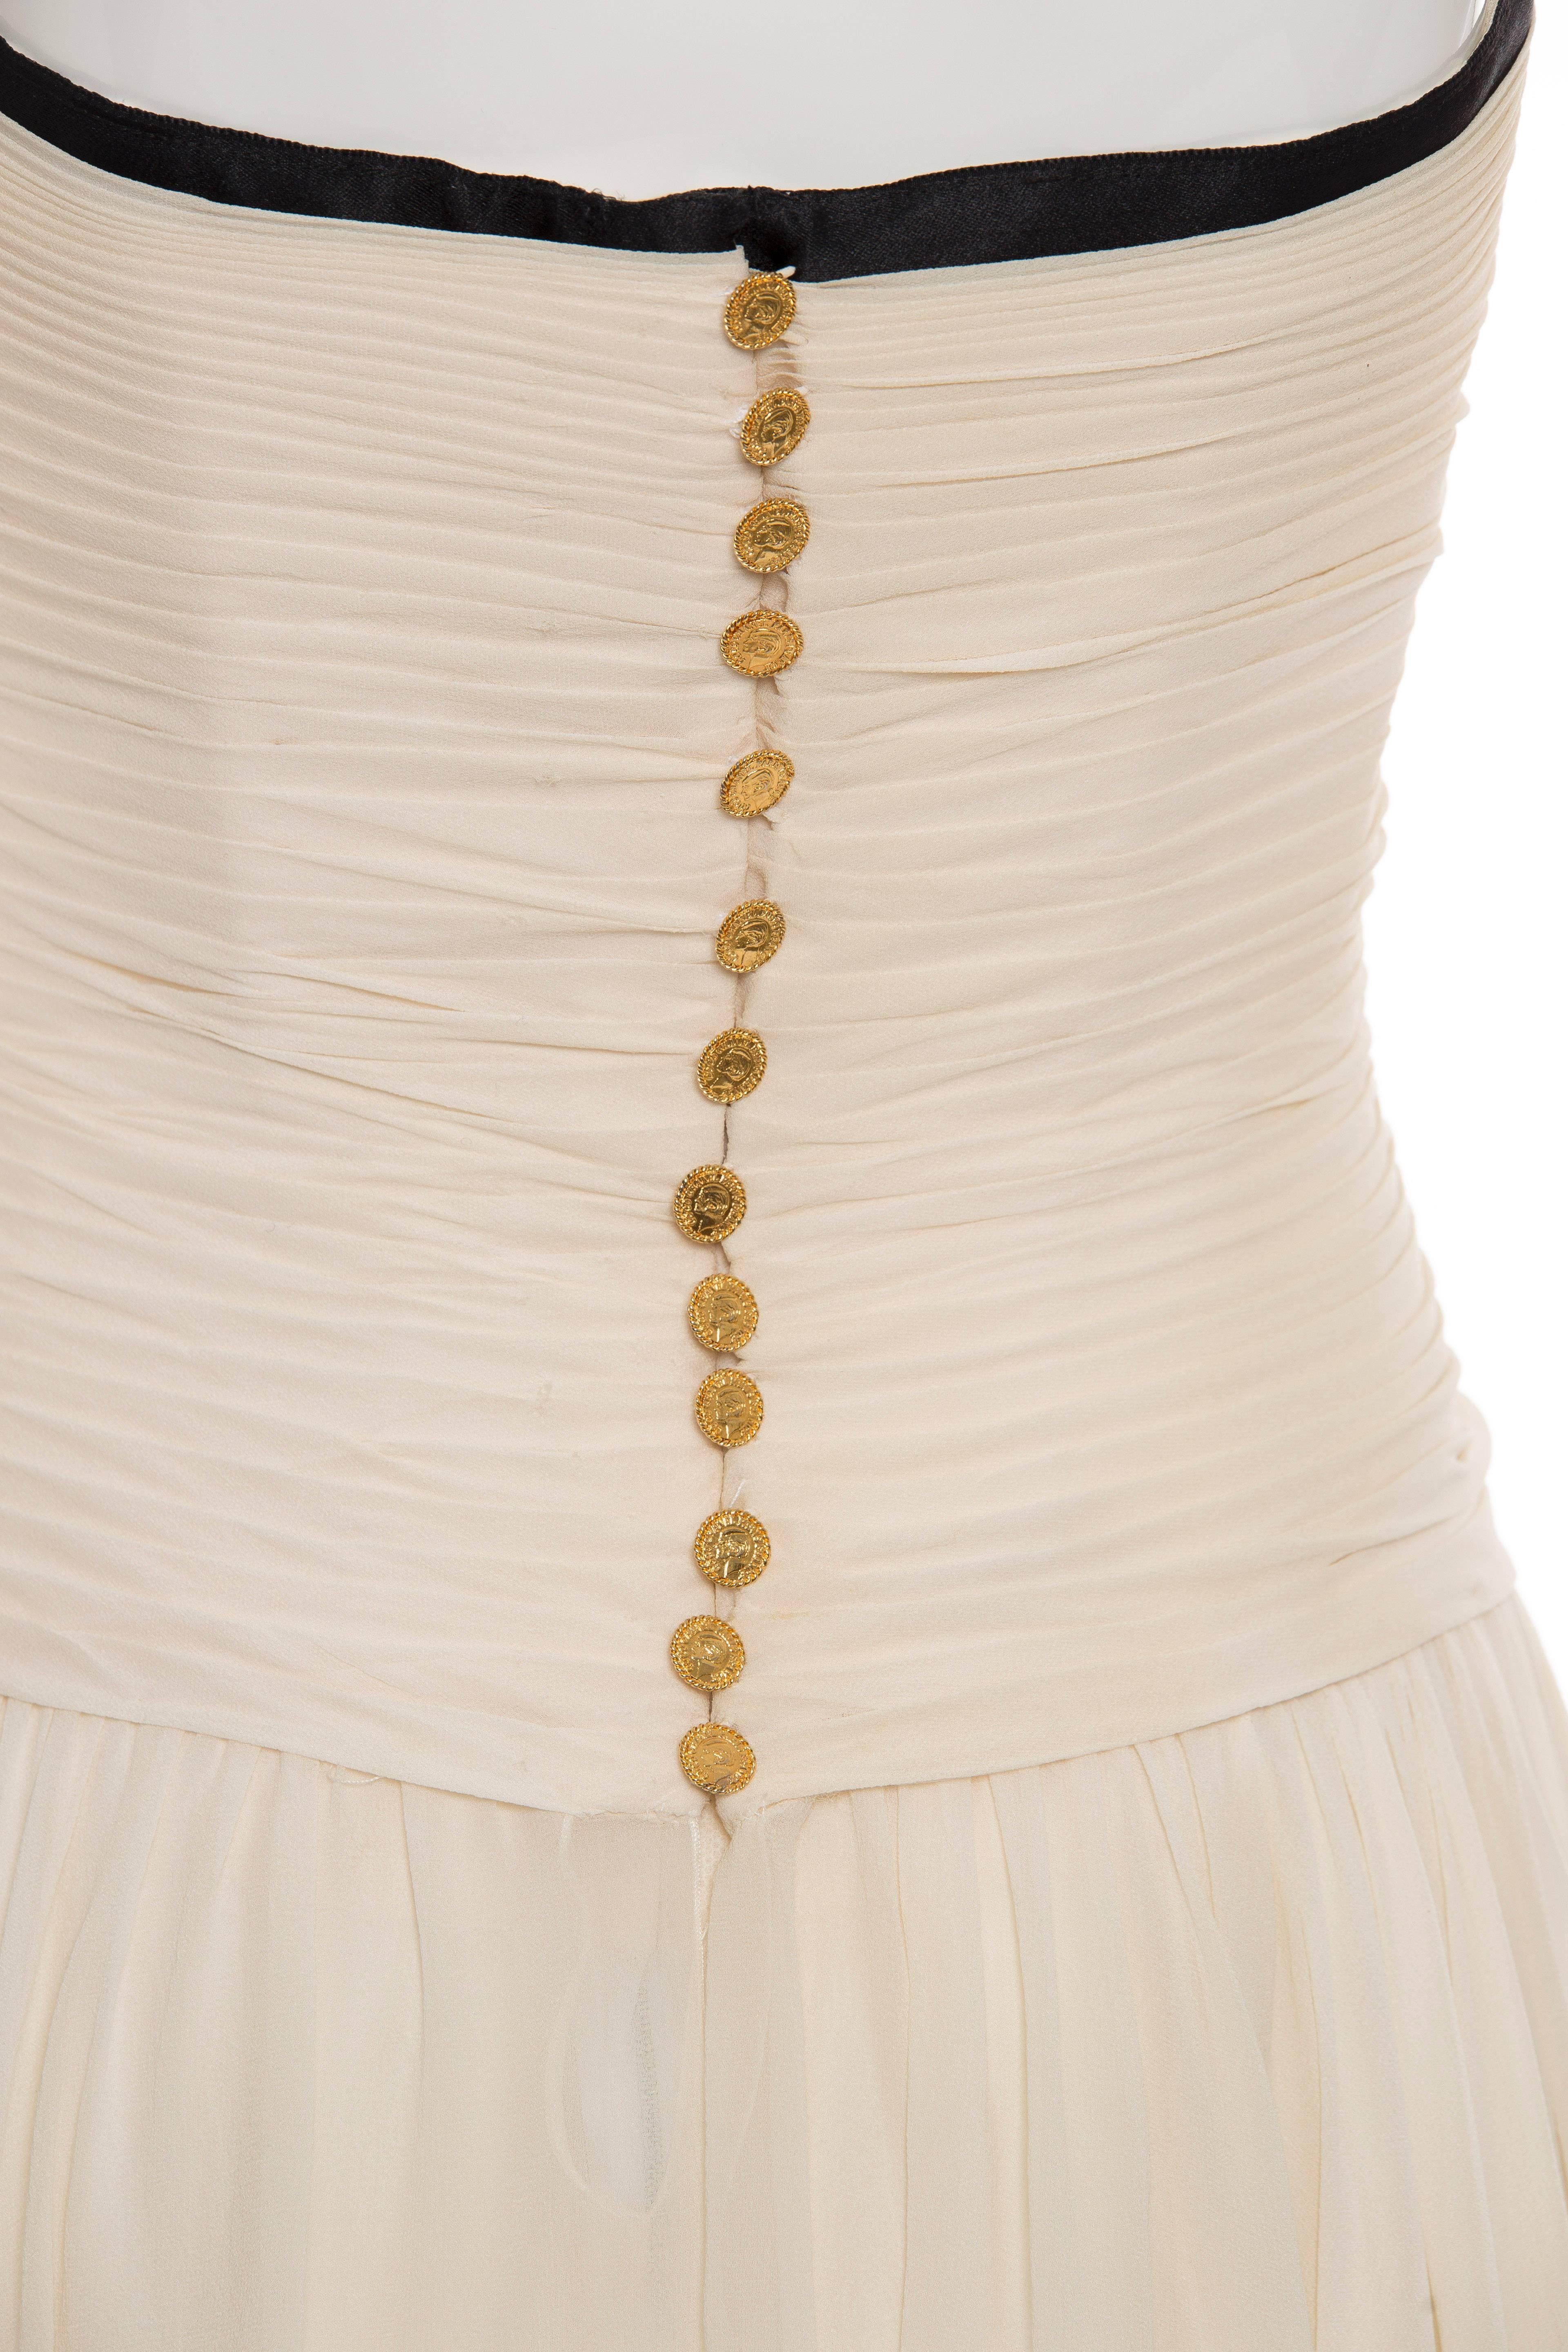 Chanel Silk Chiffon Strapless Dress, Circa 1980s 3